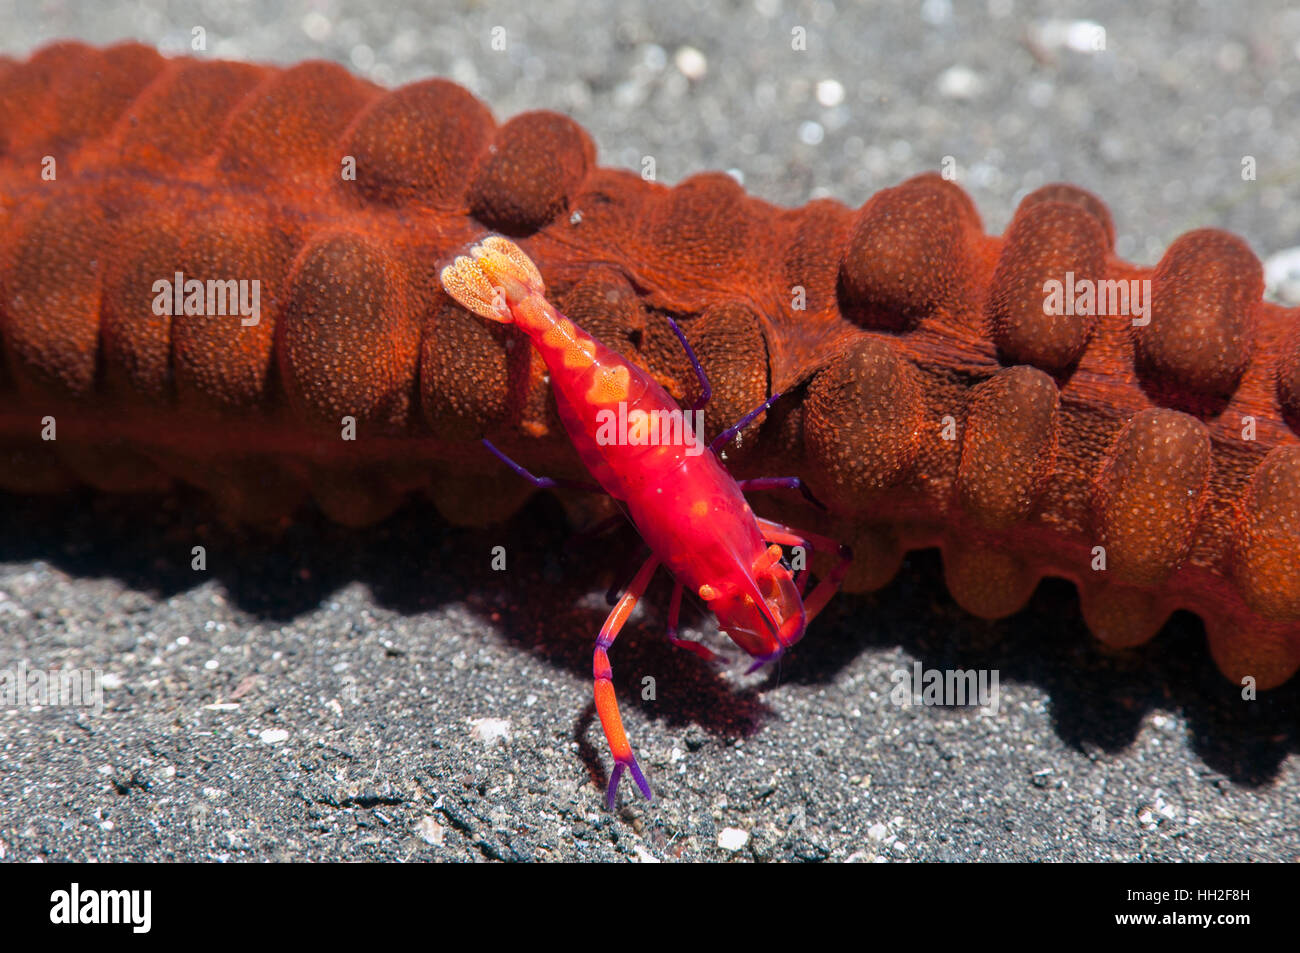 Emperor shrimp (Periclemenes imperator] perched on Harmonica sea cucumber [Opheodesoma australiensis].  Lembeh, Sulawesi, Indonesia. Stock Photo